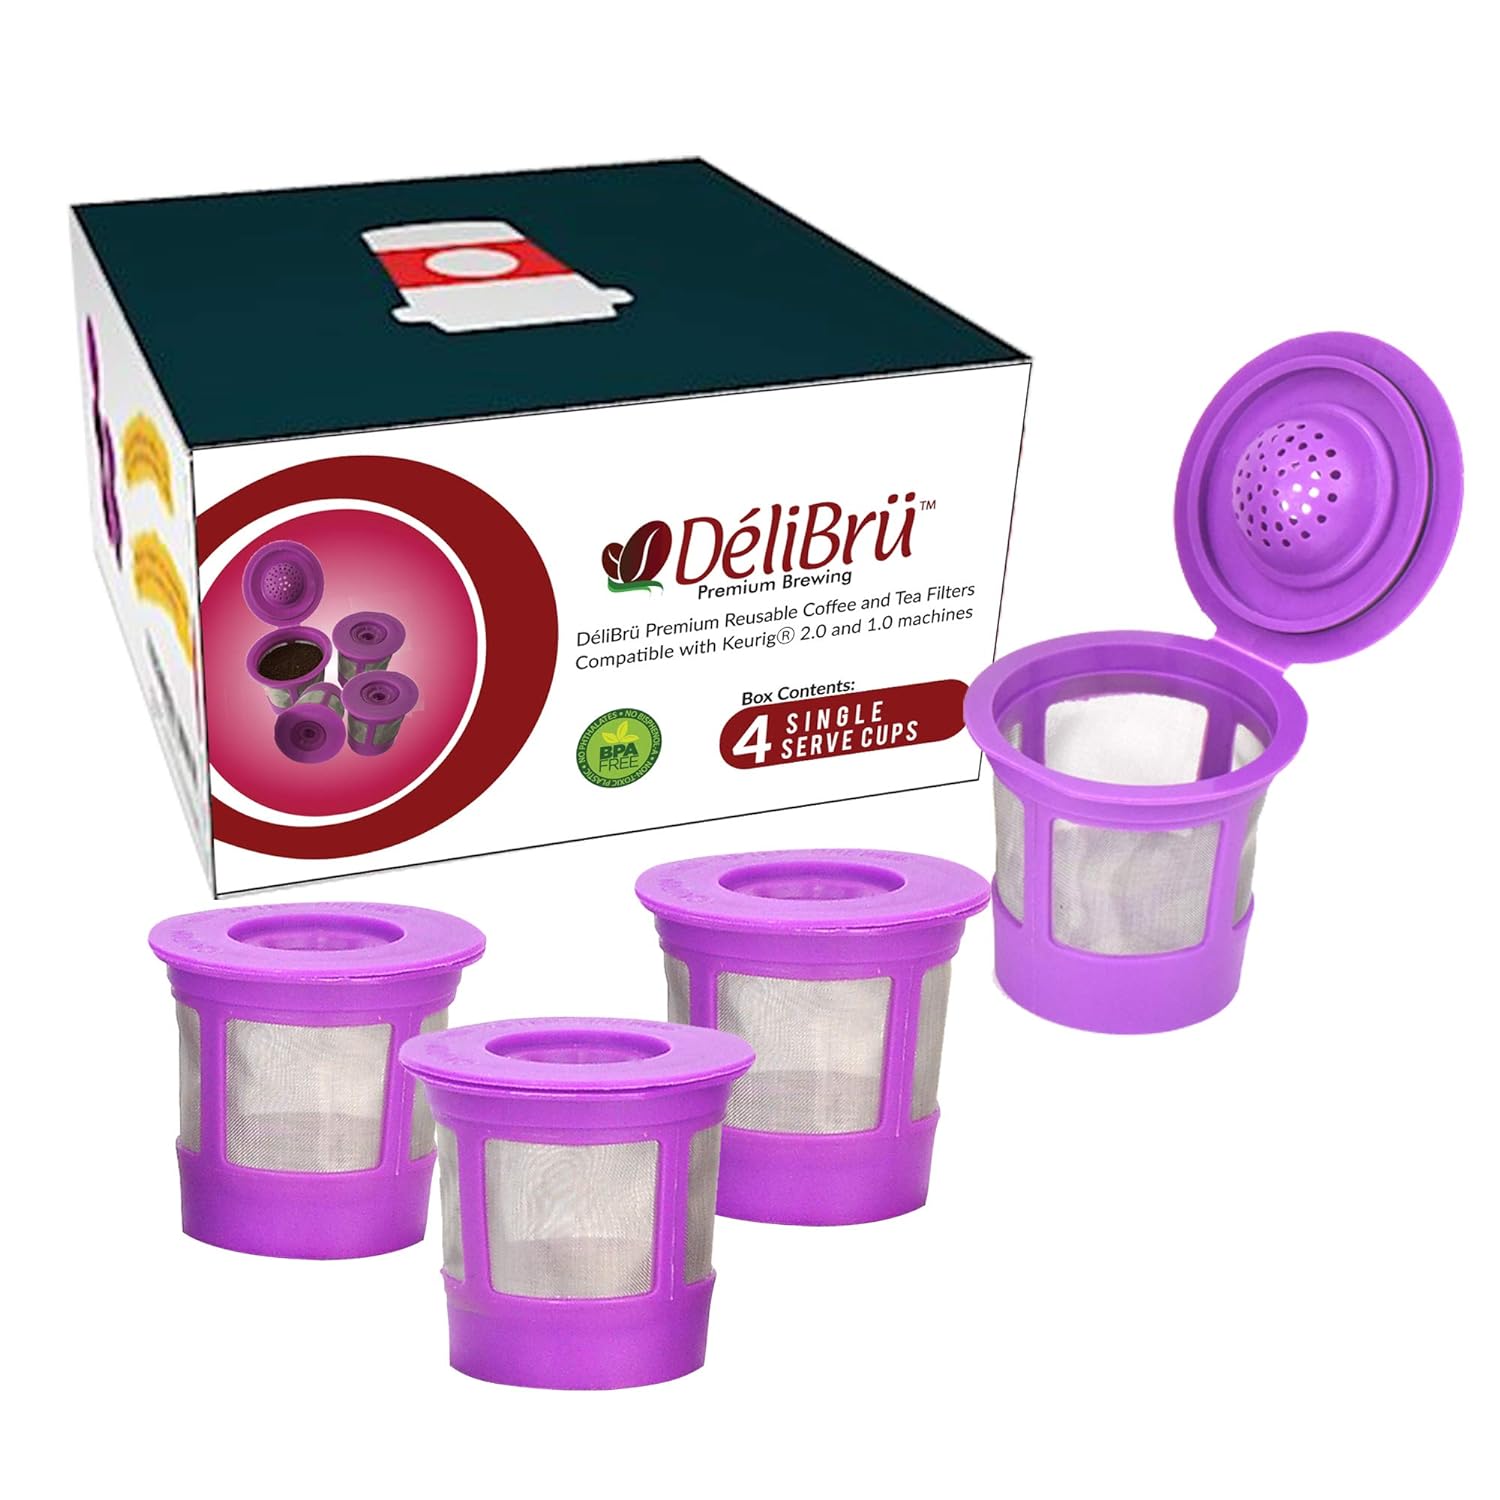 Reusable K Cups for Keurig 2.0  1.0 - Pack of 2 (Purple) - Easy to Clean - Universal Keurig Reusable Coffee Pods by Delibru